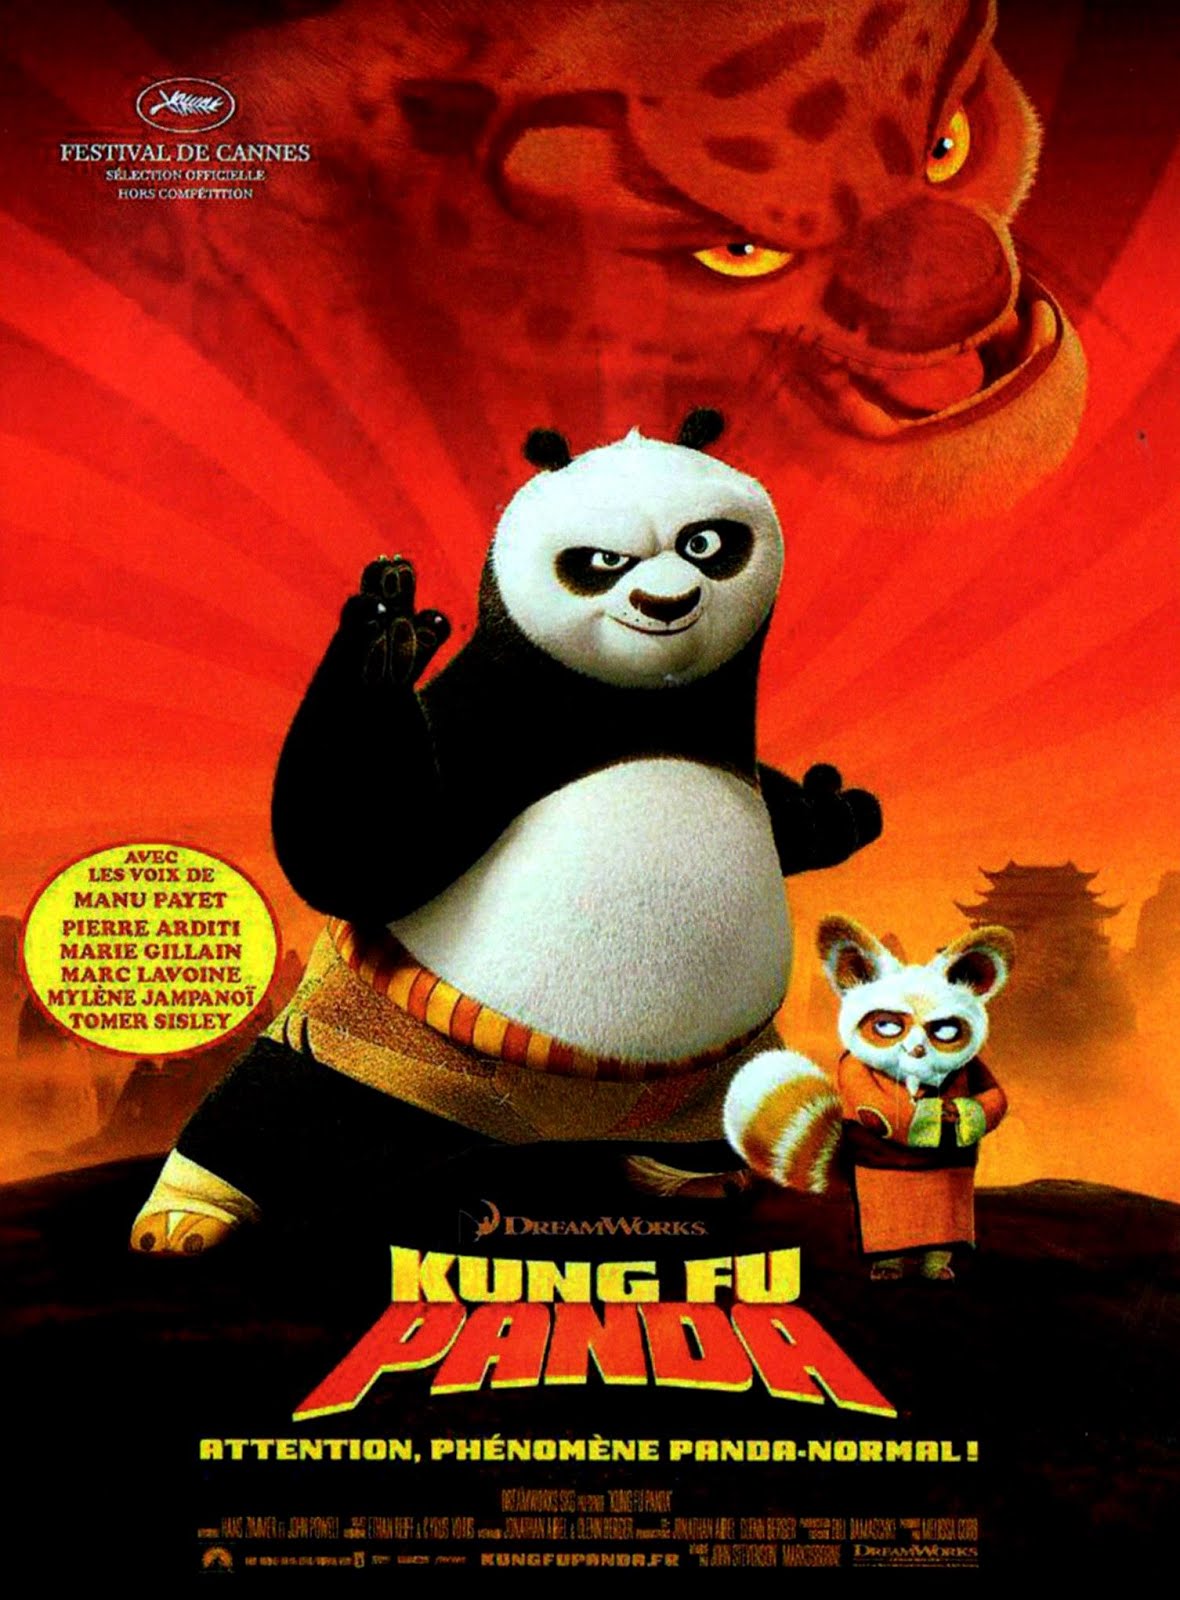 Kung Fu panda (2008) John Stevenson , Mark Osborne - Kung Fu panda (24.09.2005 / 2008)